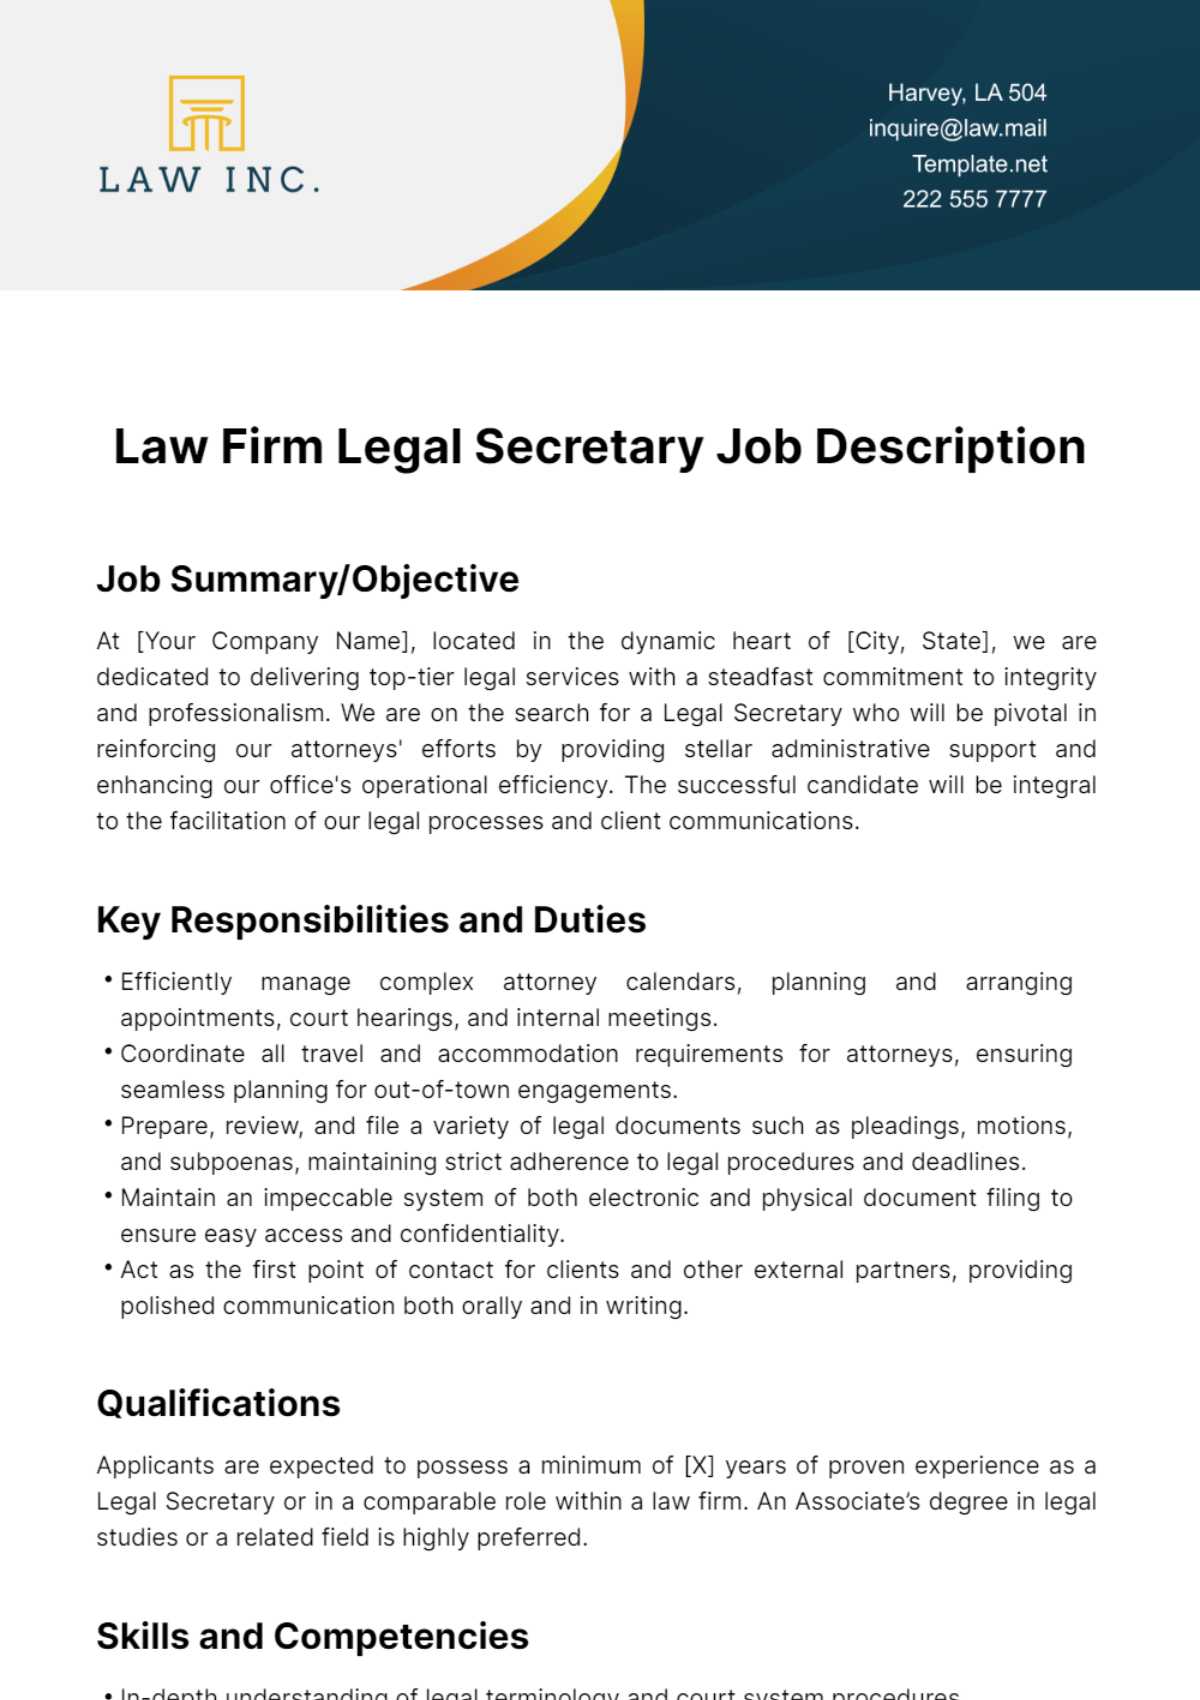 Free Law Firm Legal Secretary Job Description Template